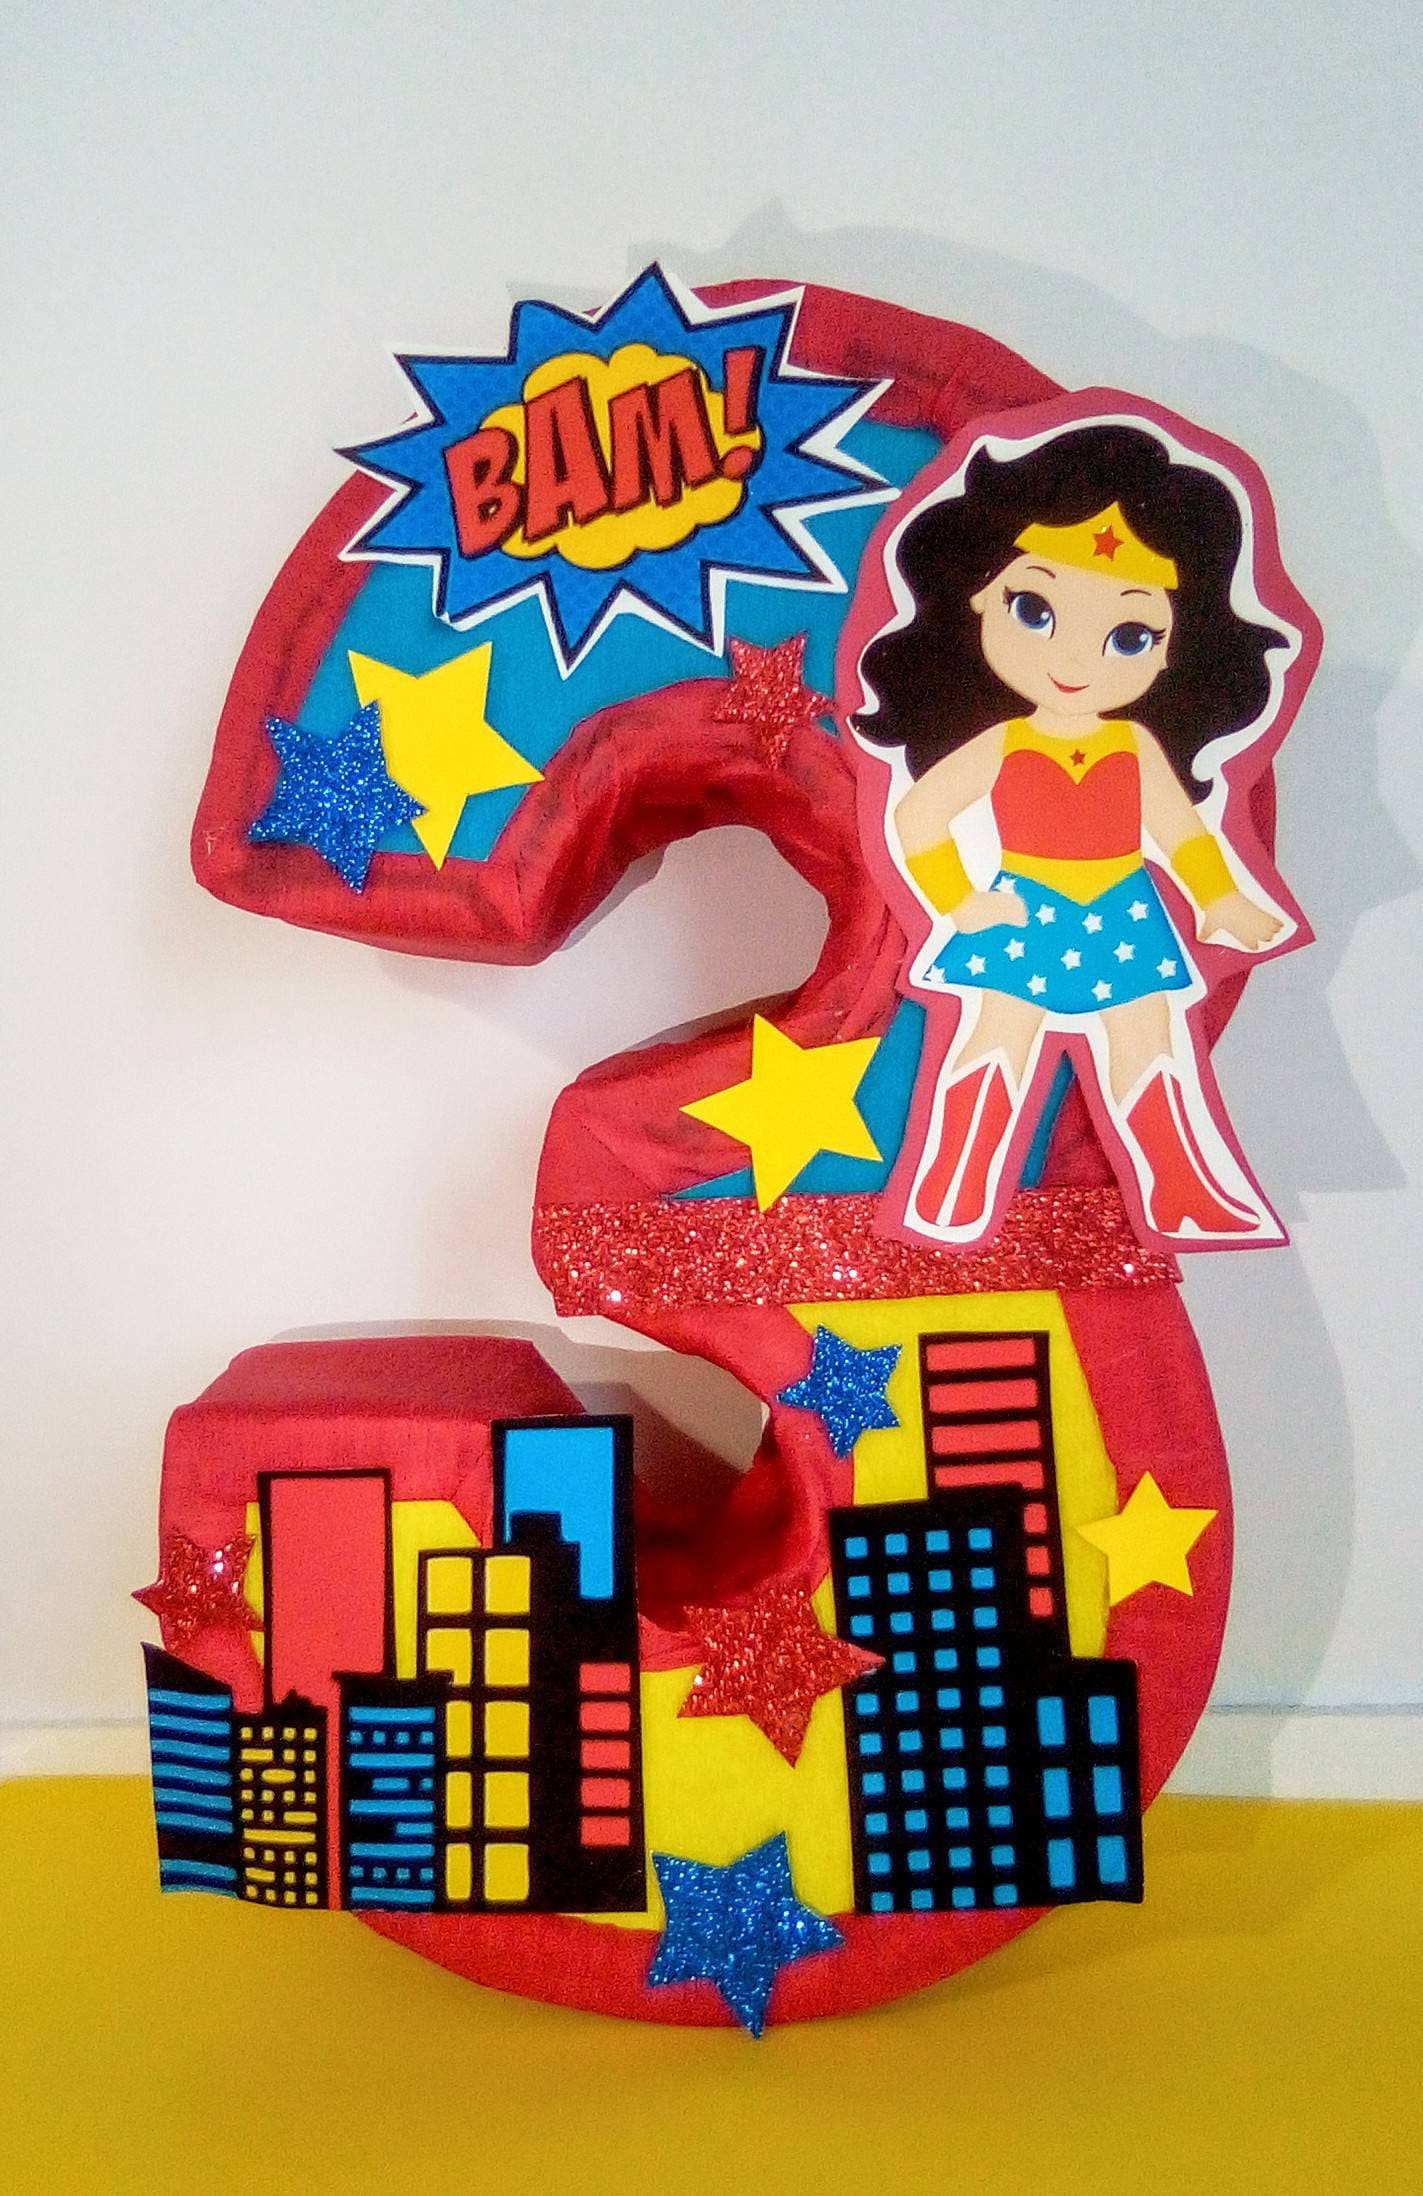 Superwoman Superhero Girls Pinata set Kids Smash Party Fun Stick Super S  Comic